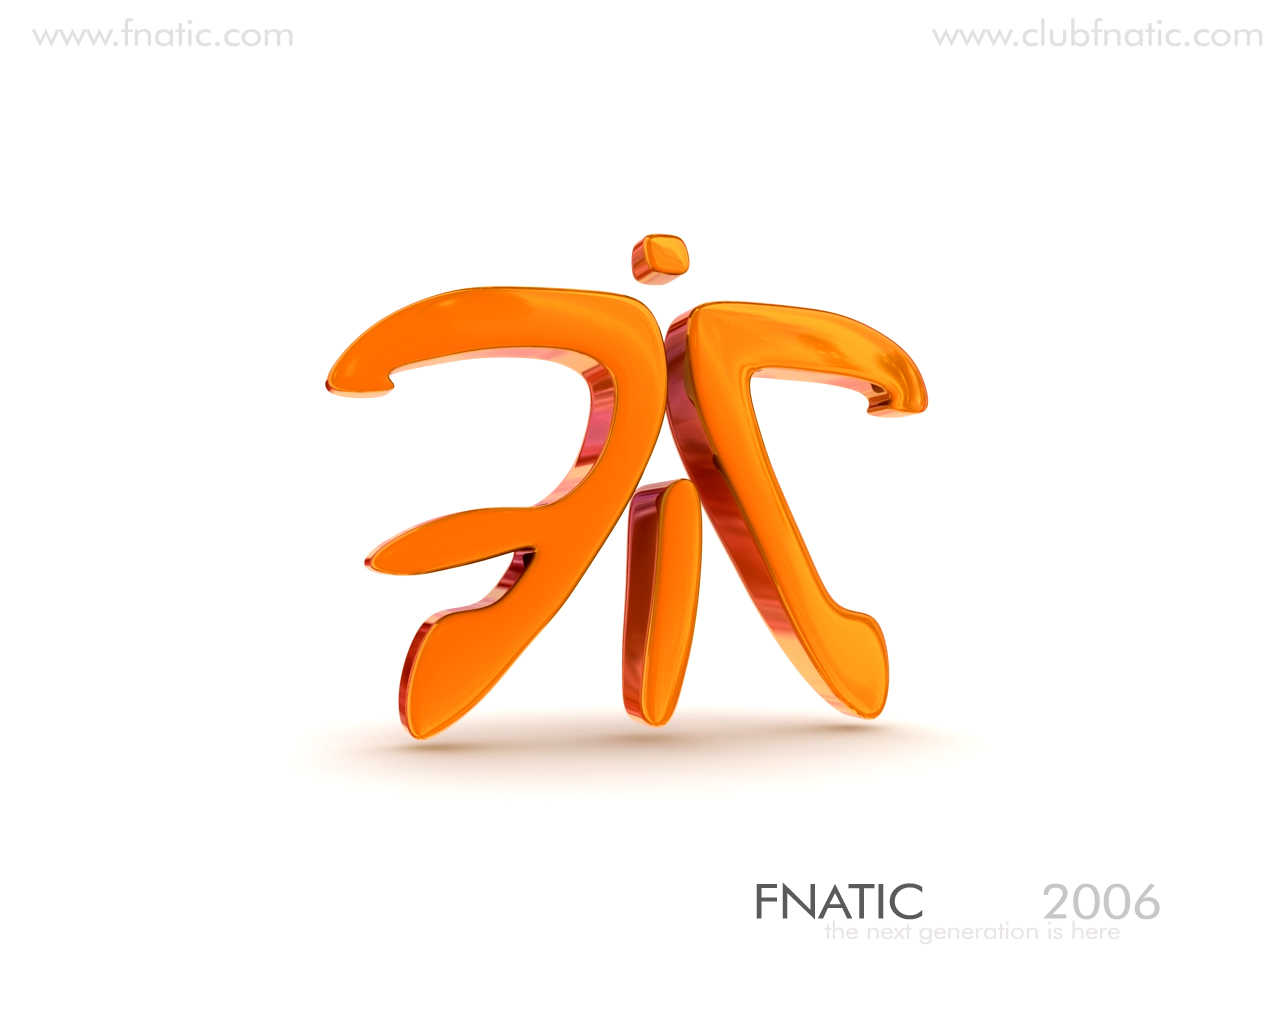 Fnatic  HD desktop images